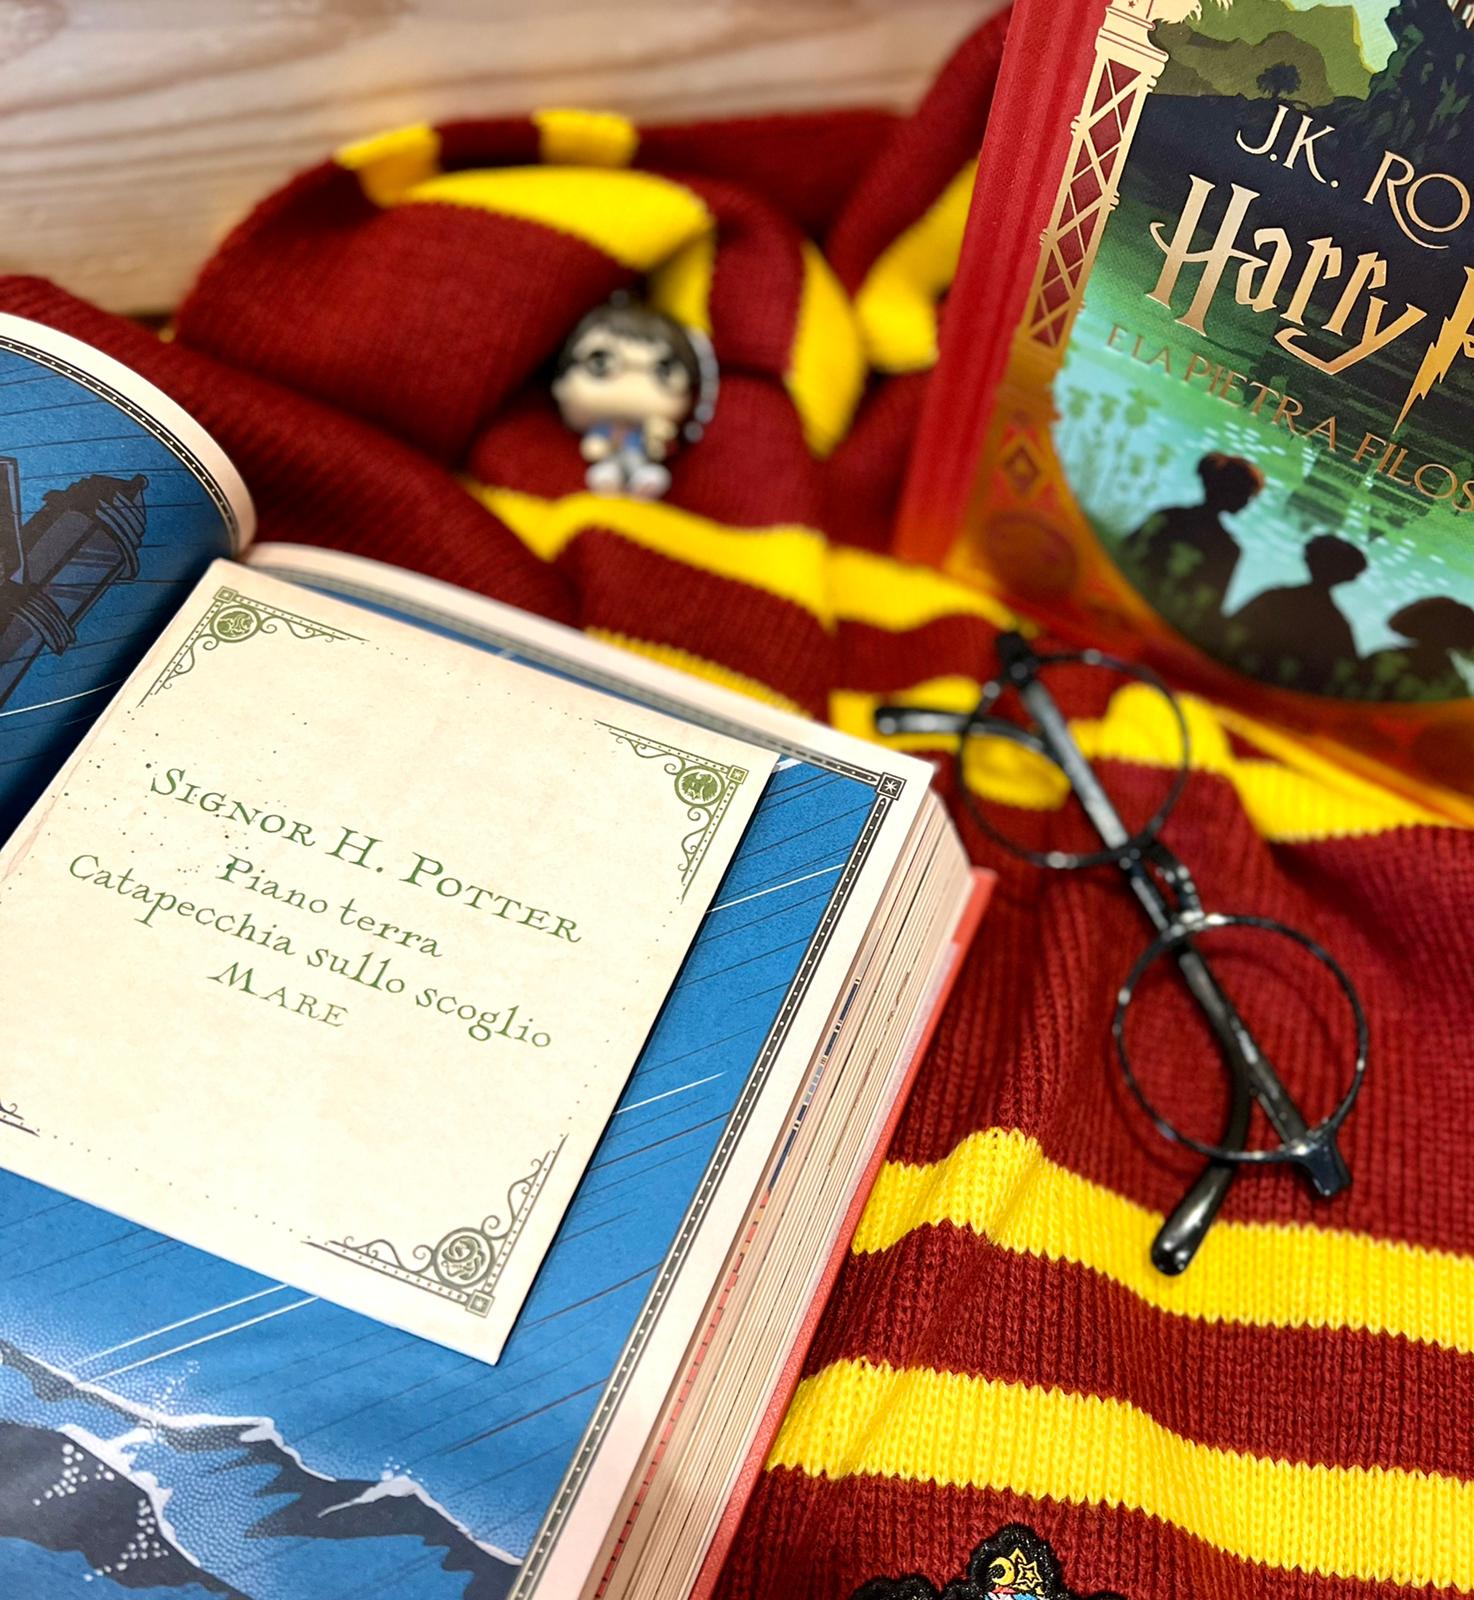 Harry Potter Vol. 1 - Harry Potter e la Pietra Filosofale